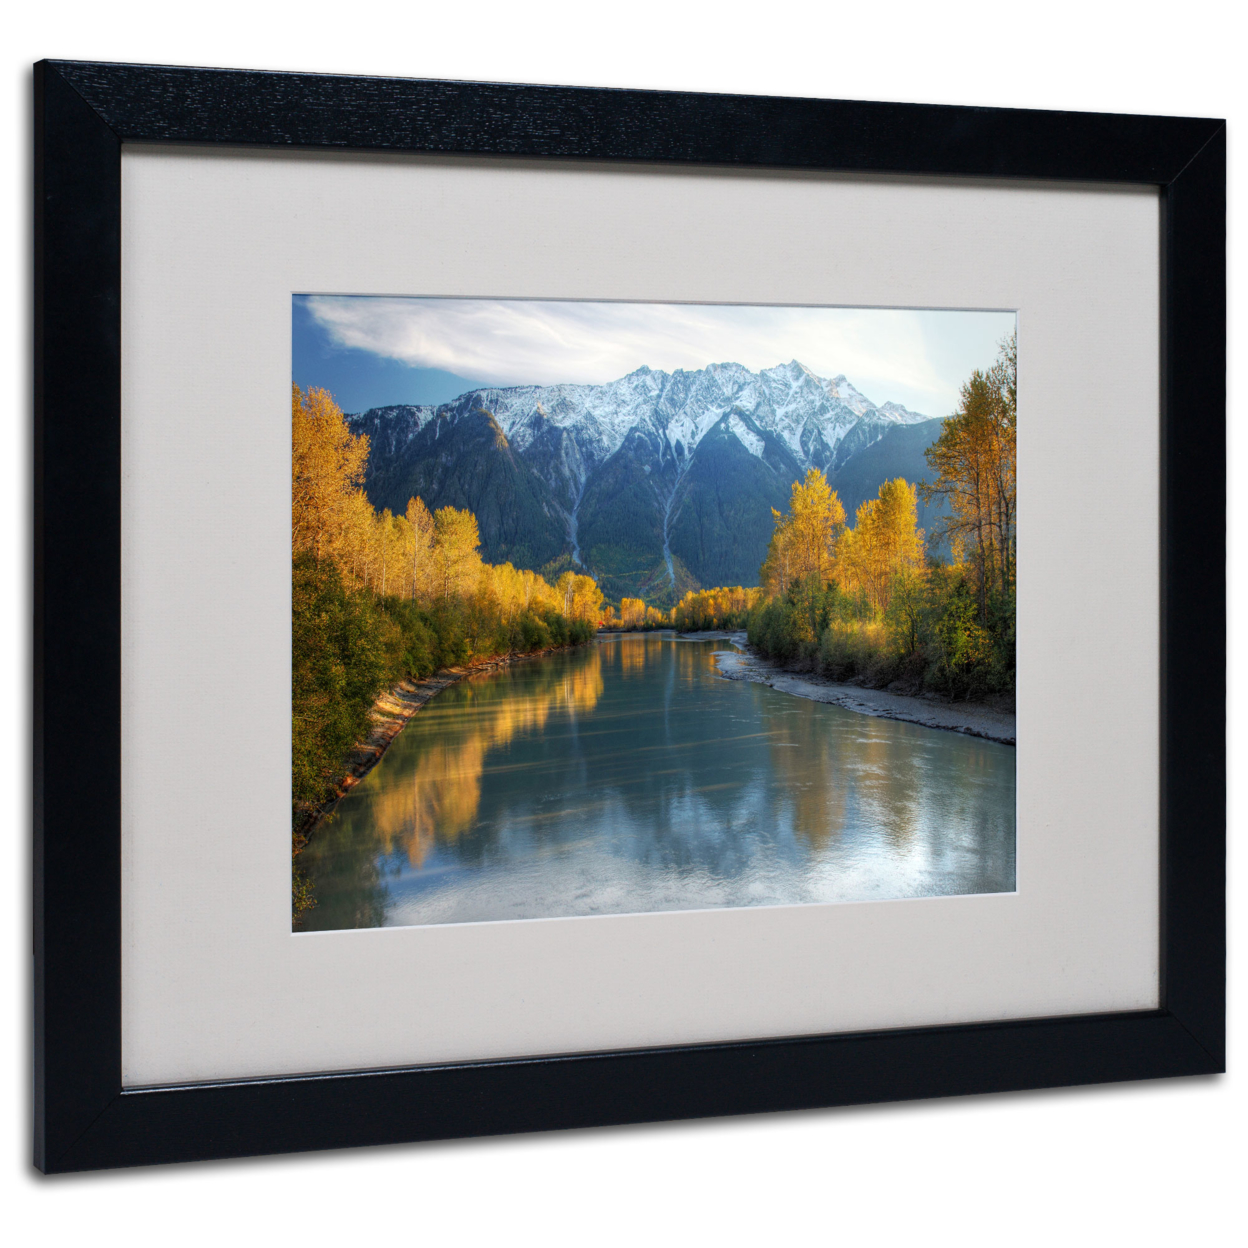 Pierre Leclerc 'Autumn River' Black Wooden Framed Art 18 X 22 Inches